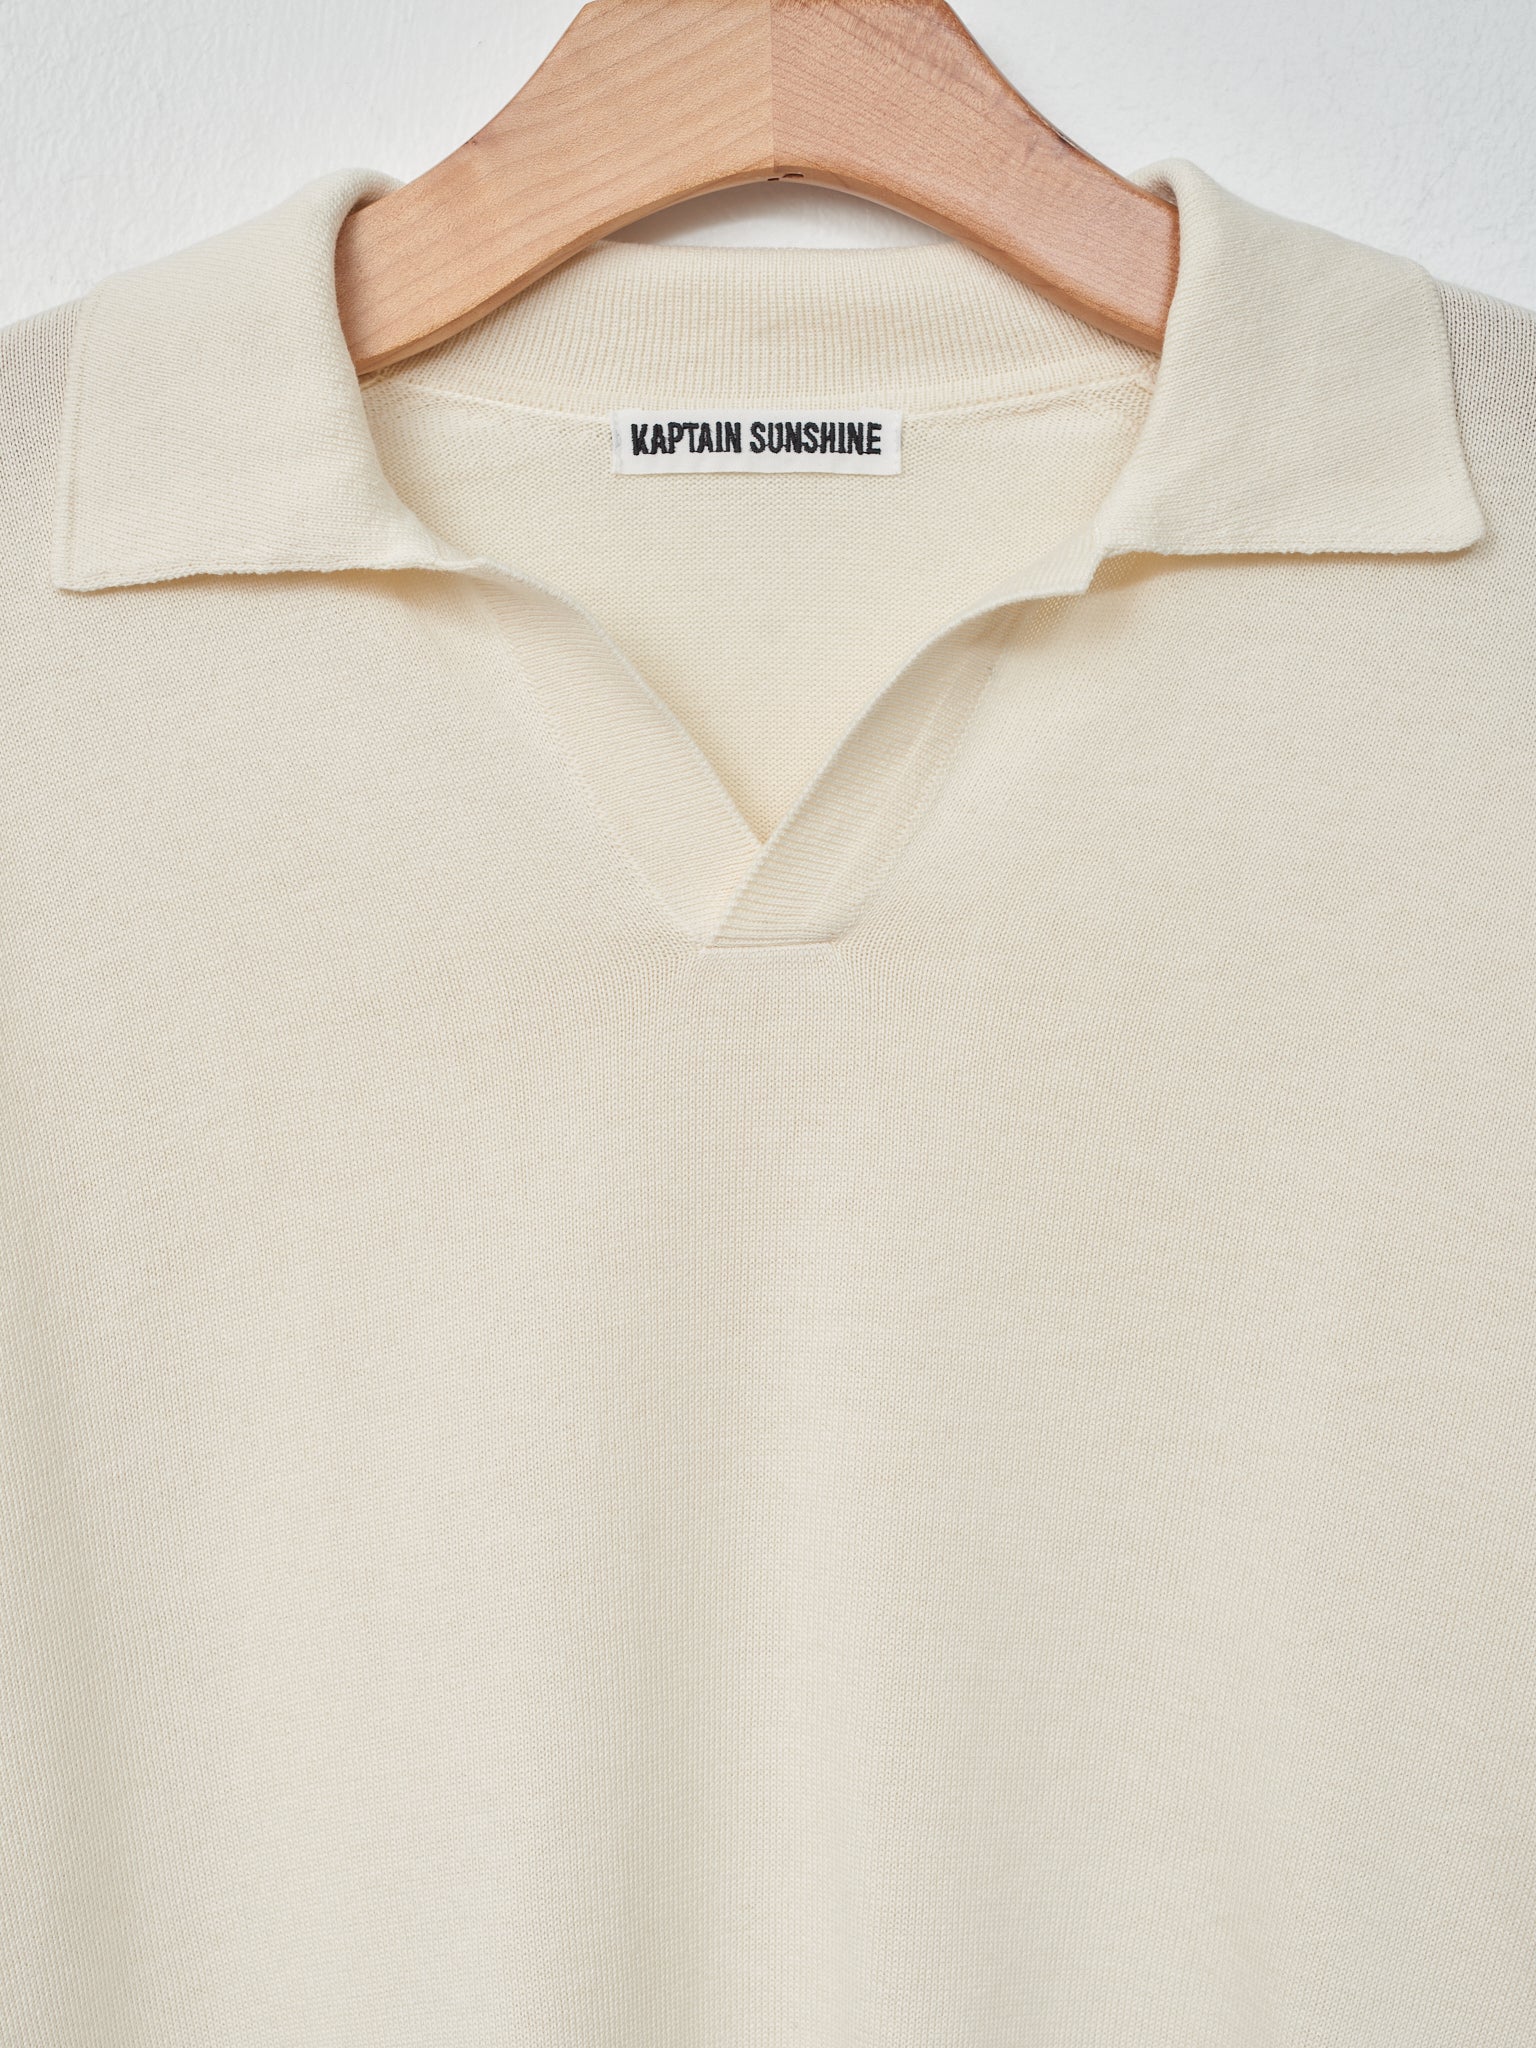 Namu Shop - Kaptain Sunshine Cotton Knit Skipper Shirt - Ecru